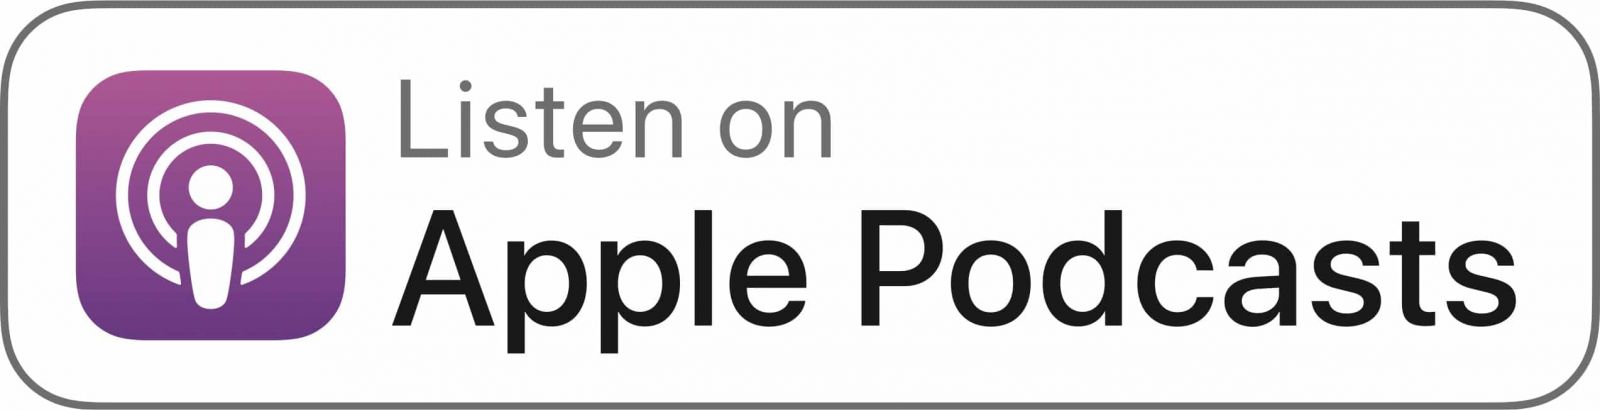 Listen on Apple Podcasts!